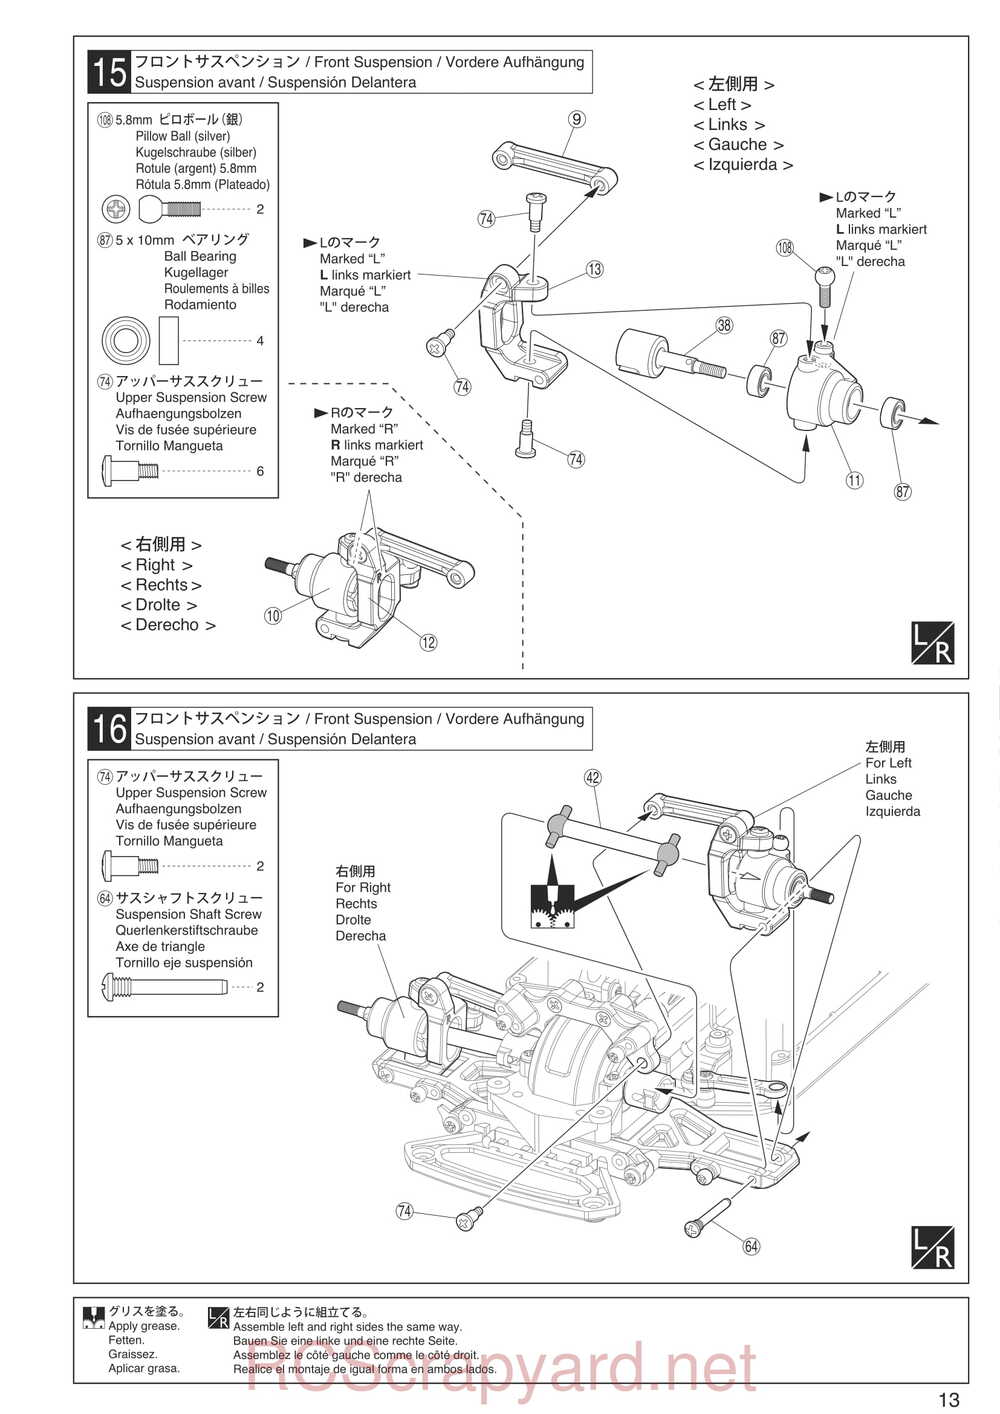 Kyosho - 30912 - EP Fazer Rally - Manual - Page 13